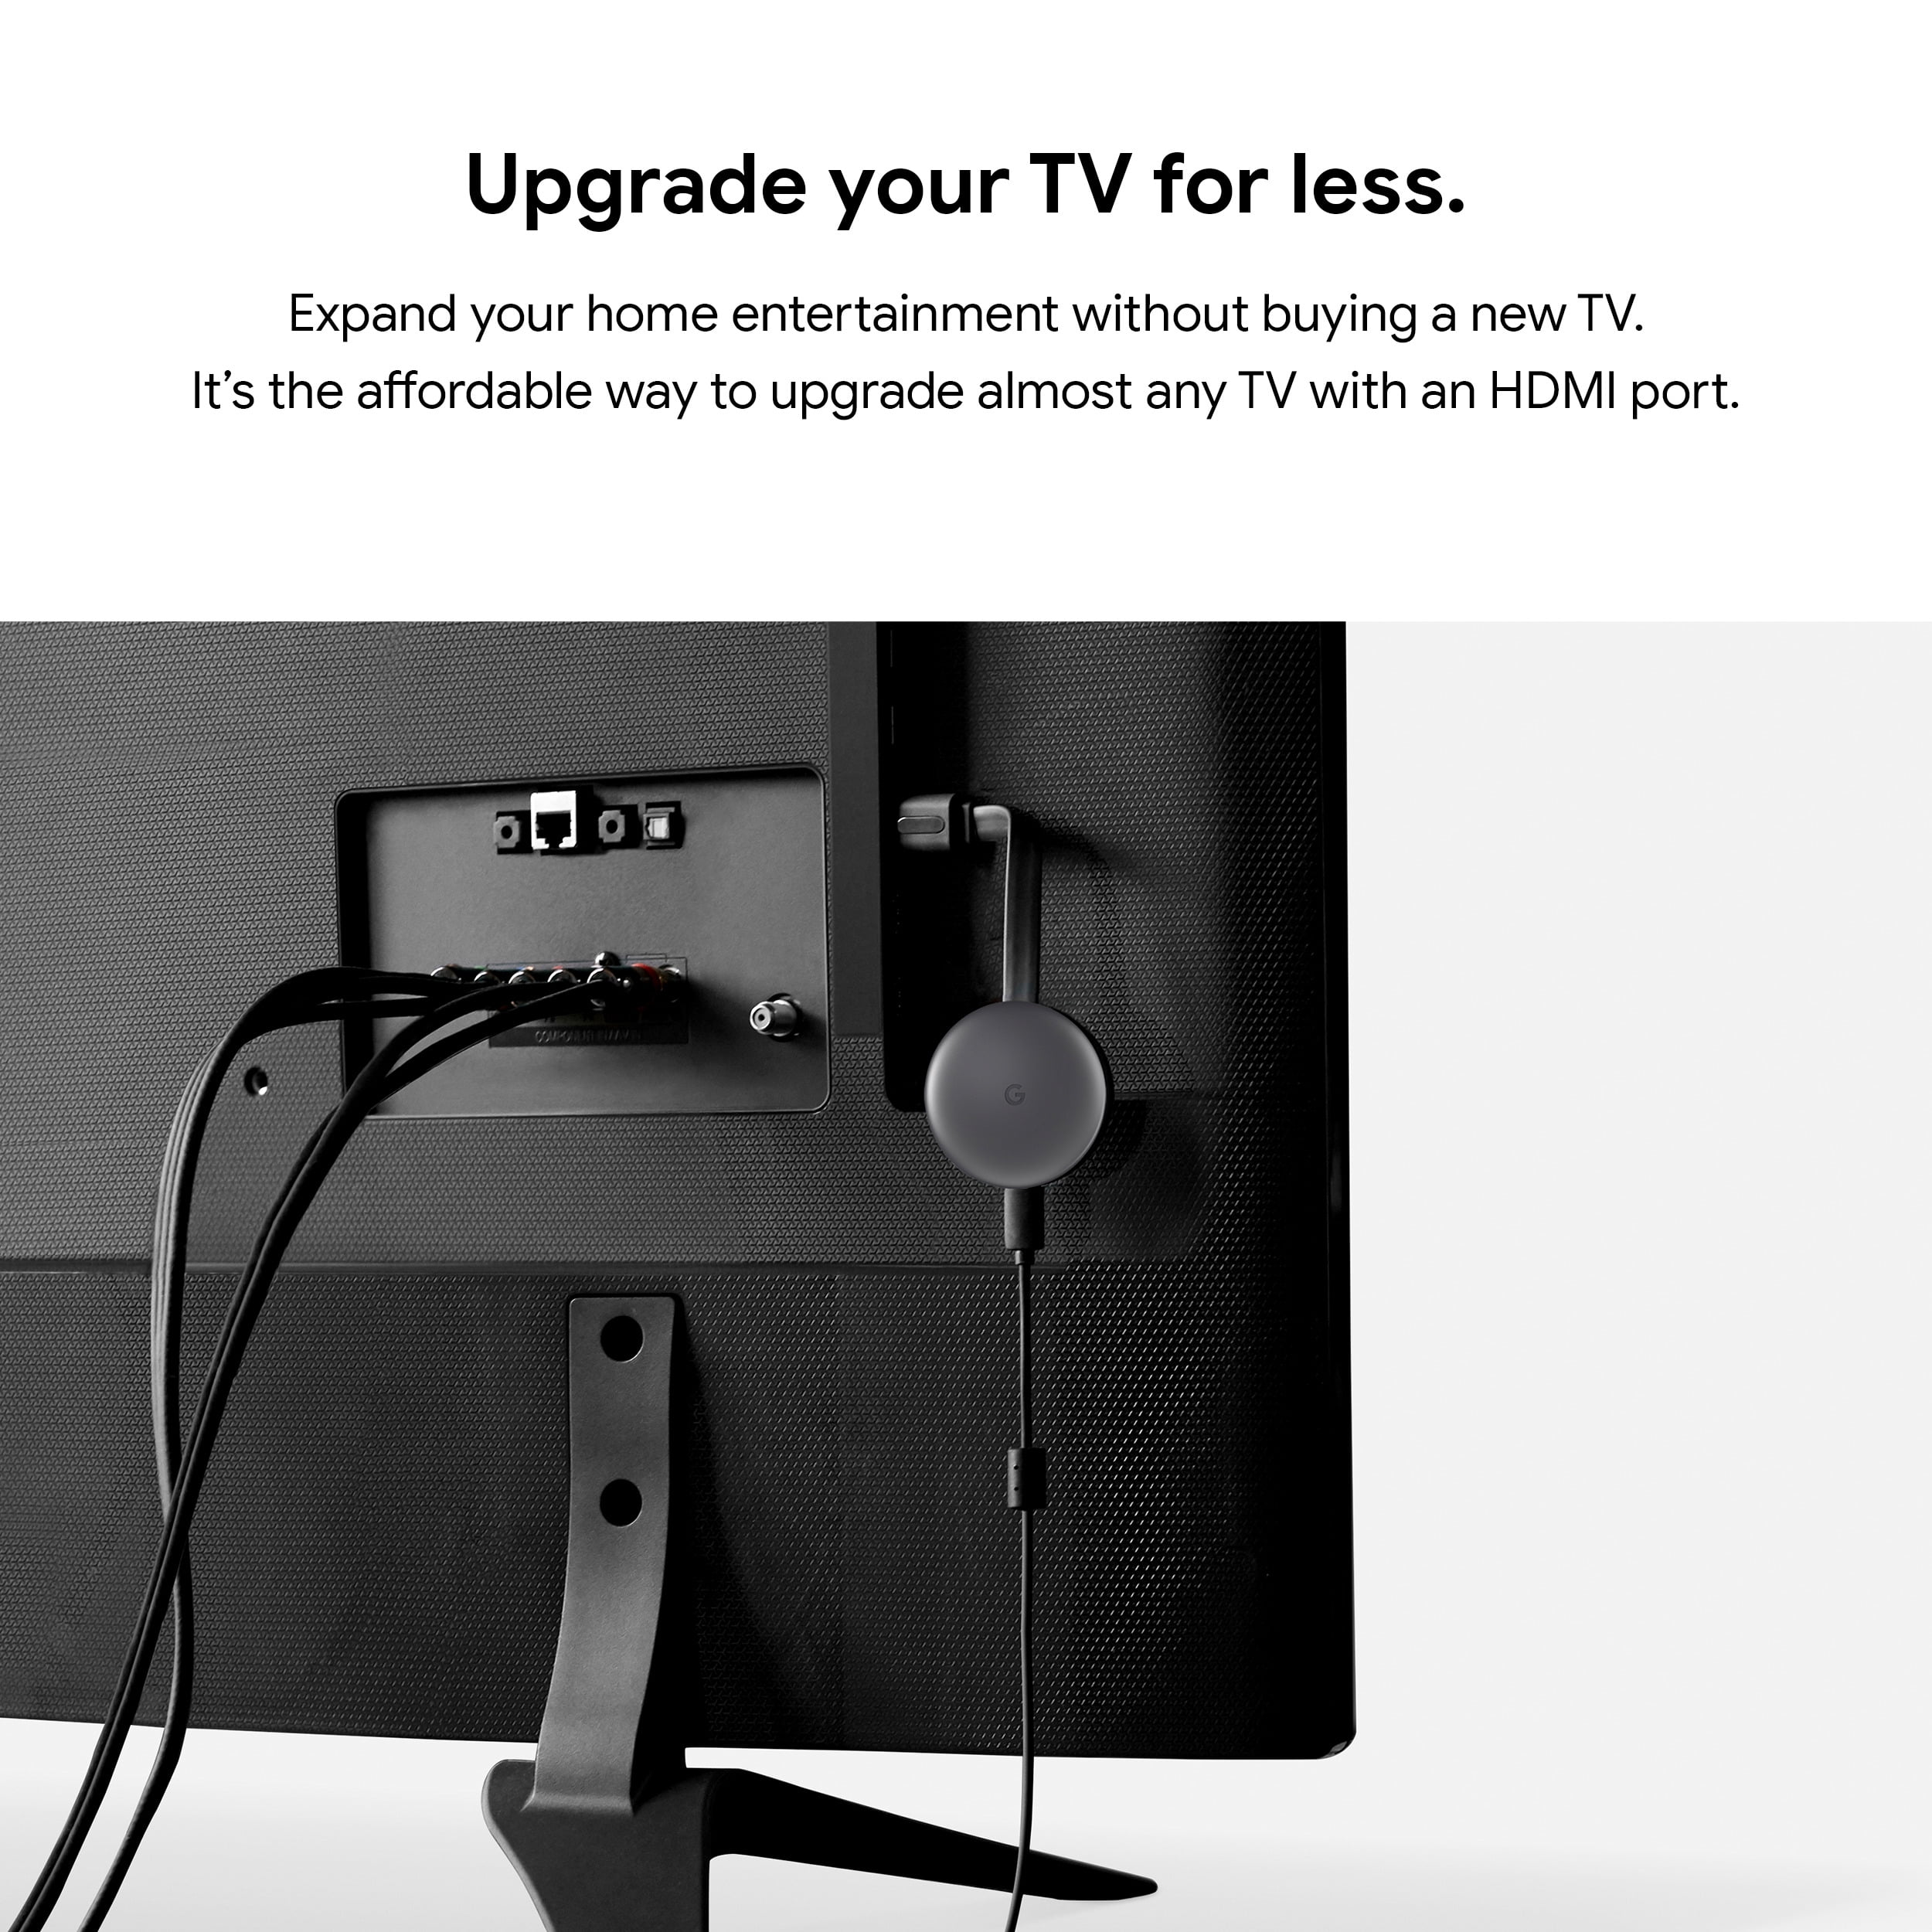 Google Smart TV Kit: Google Home Mini and Chromecast, Walmart Exclusive